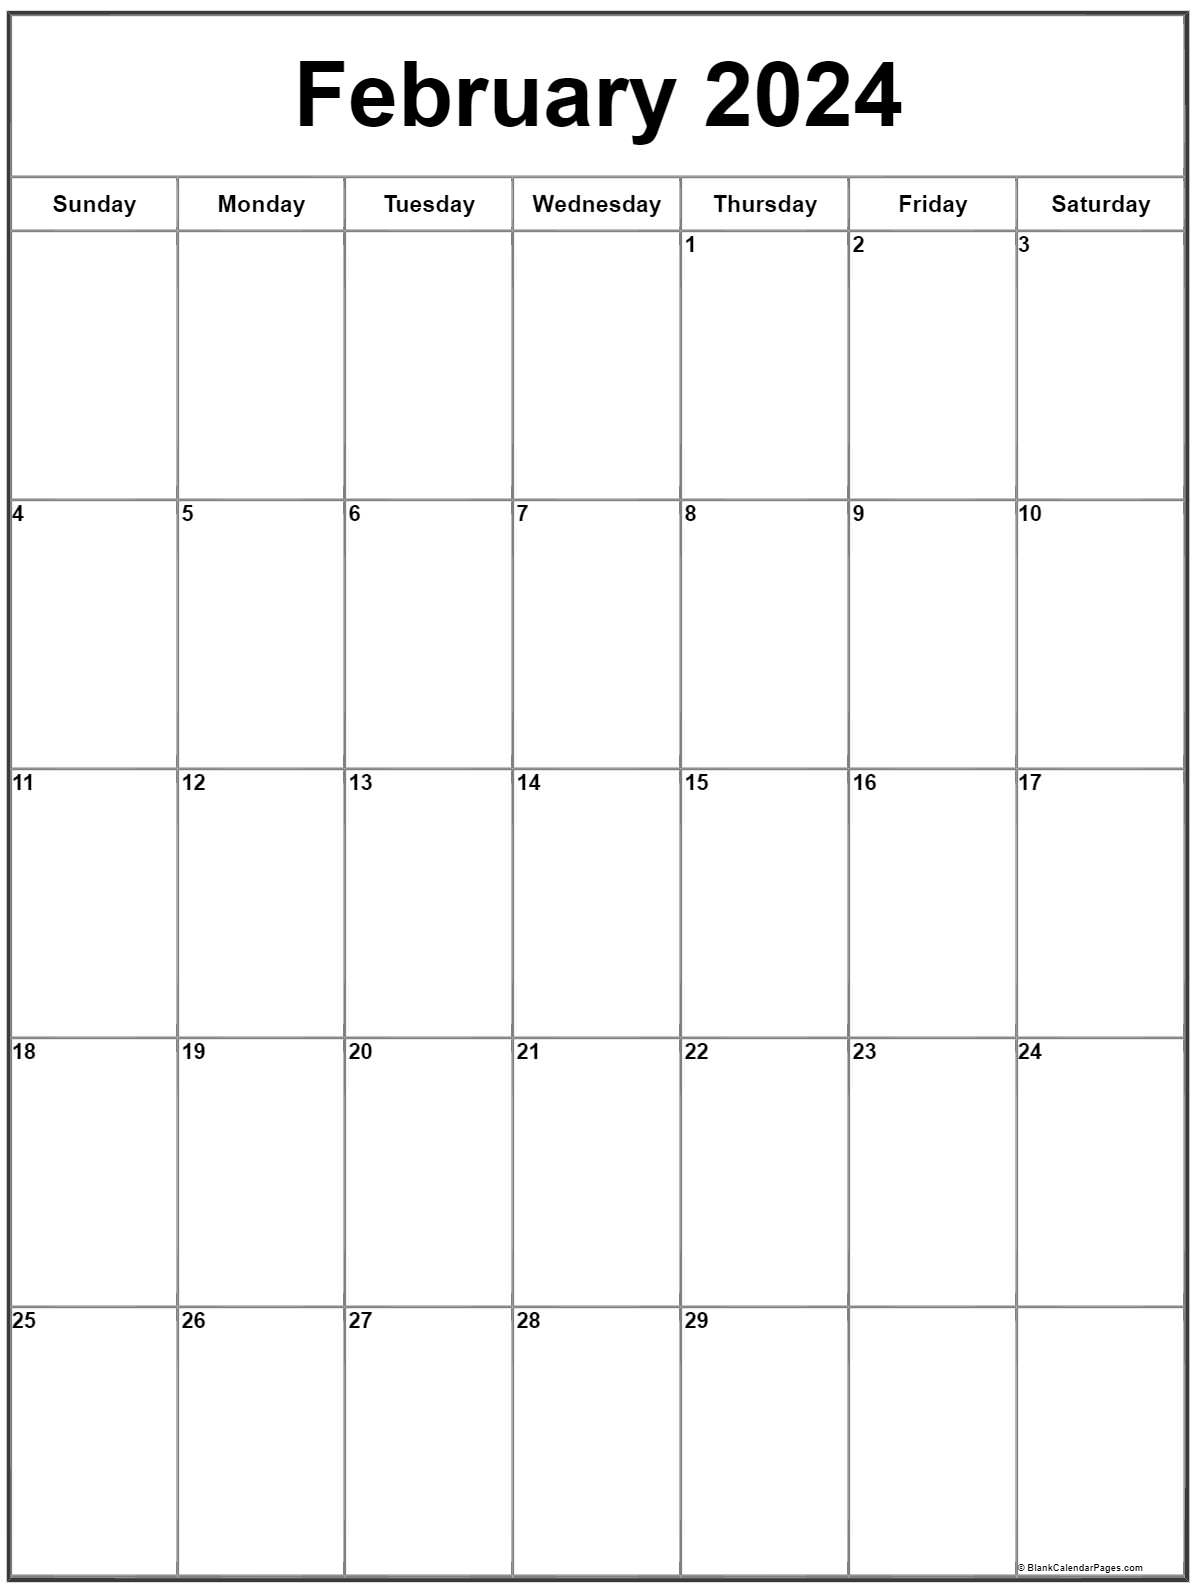 February 2024 Calendar - Free Printable Blank Calendar February 2024